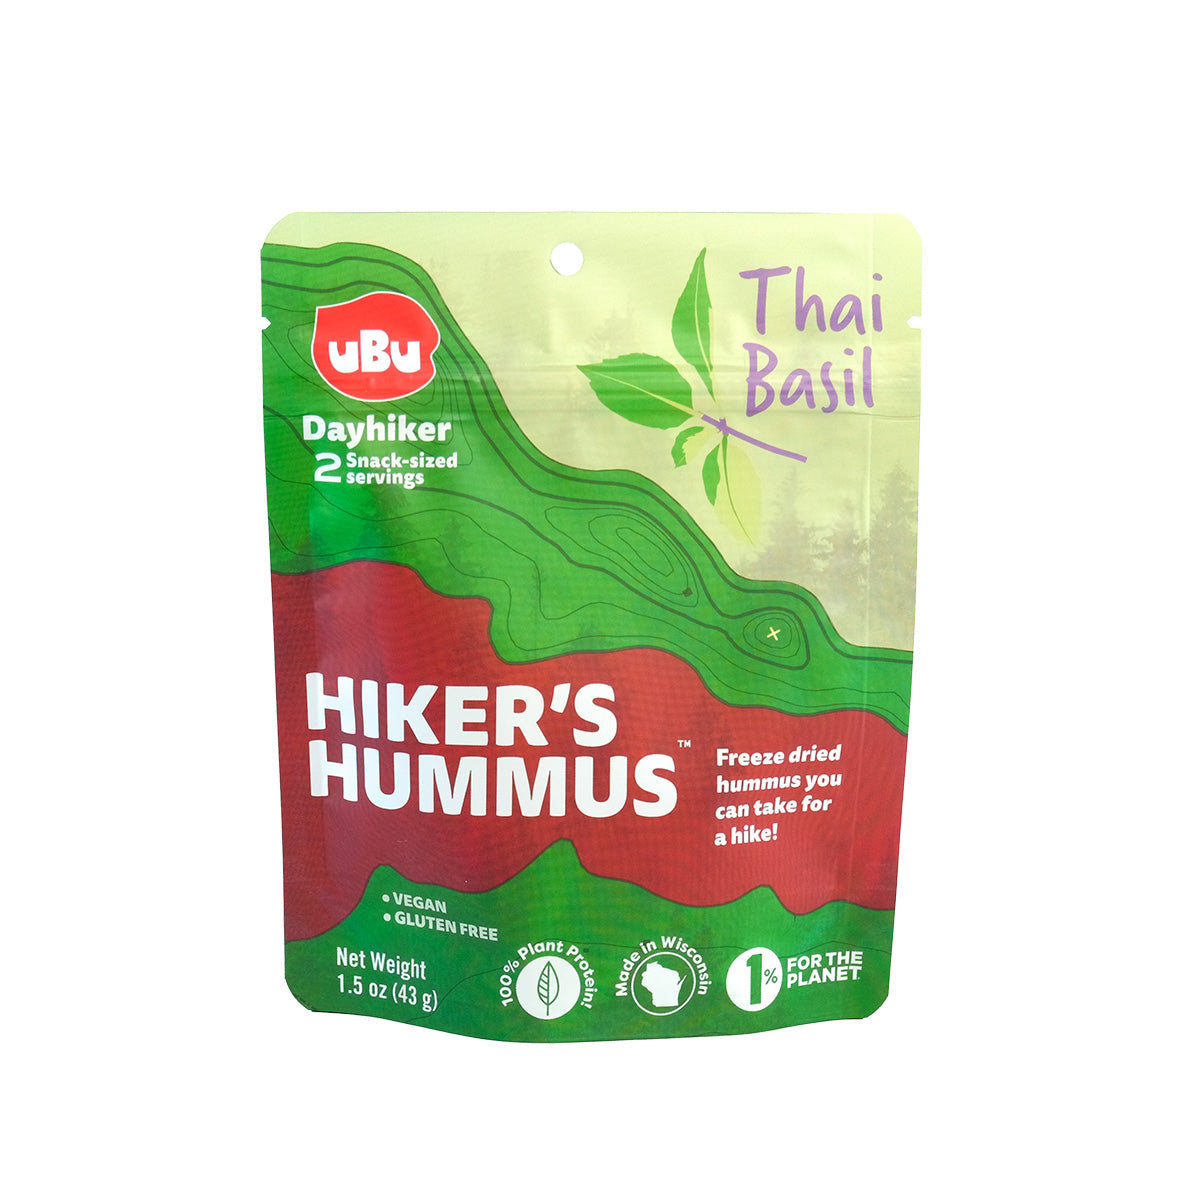 uBu Hiker's Hummus (4-pack)